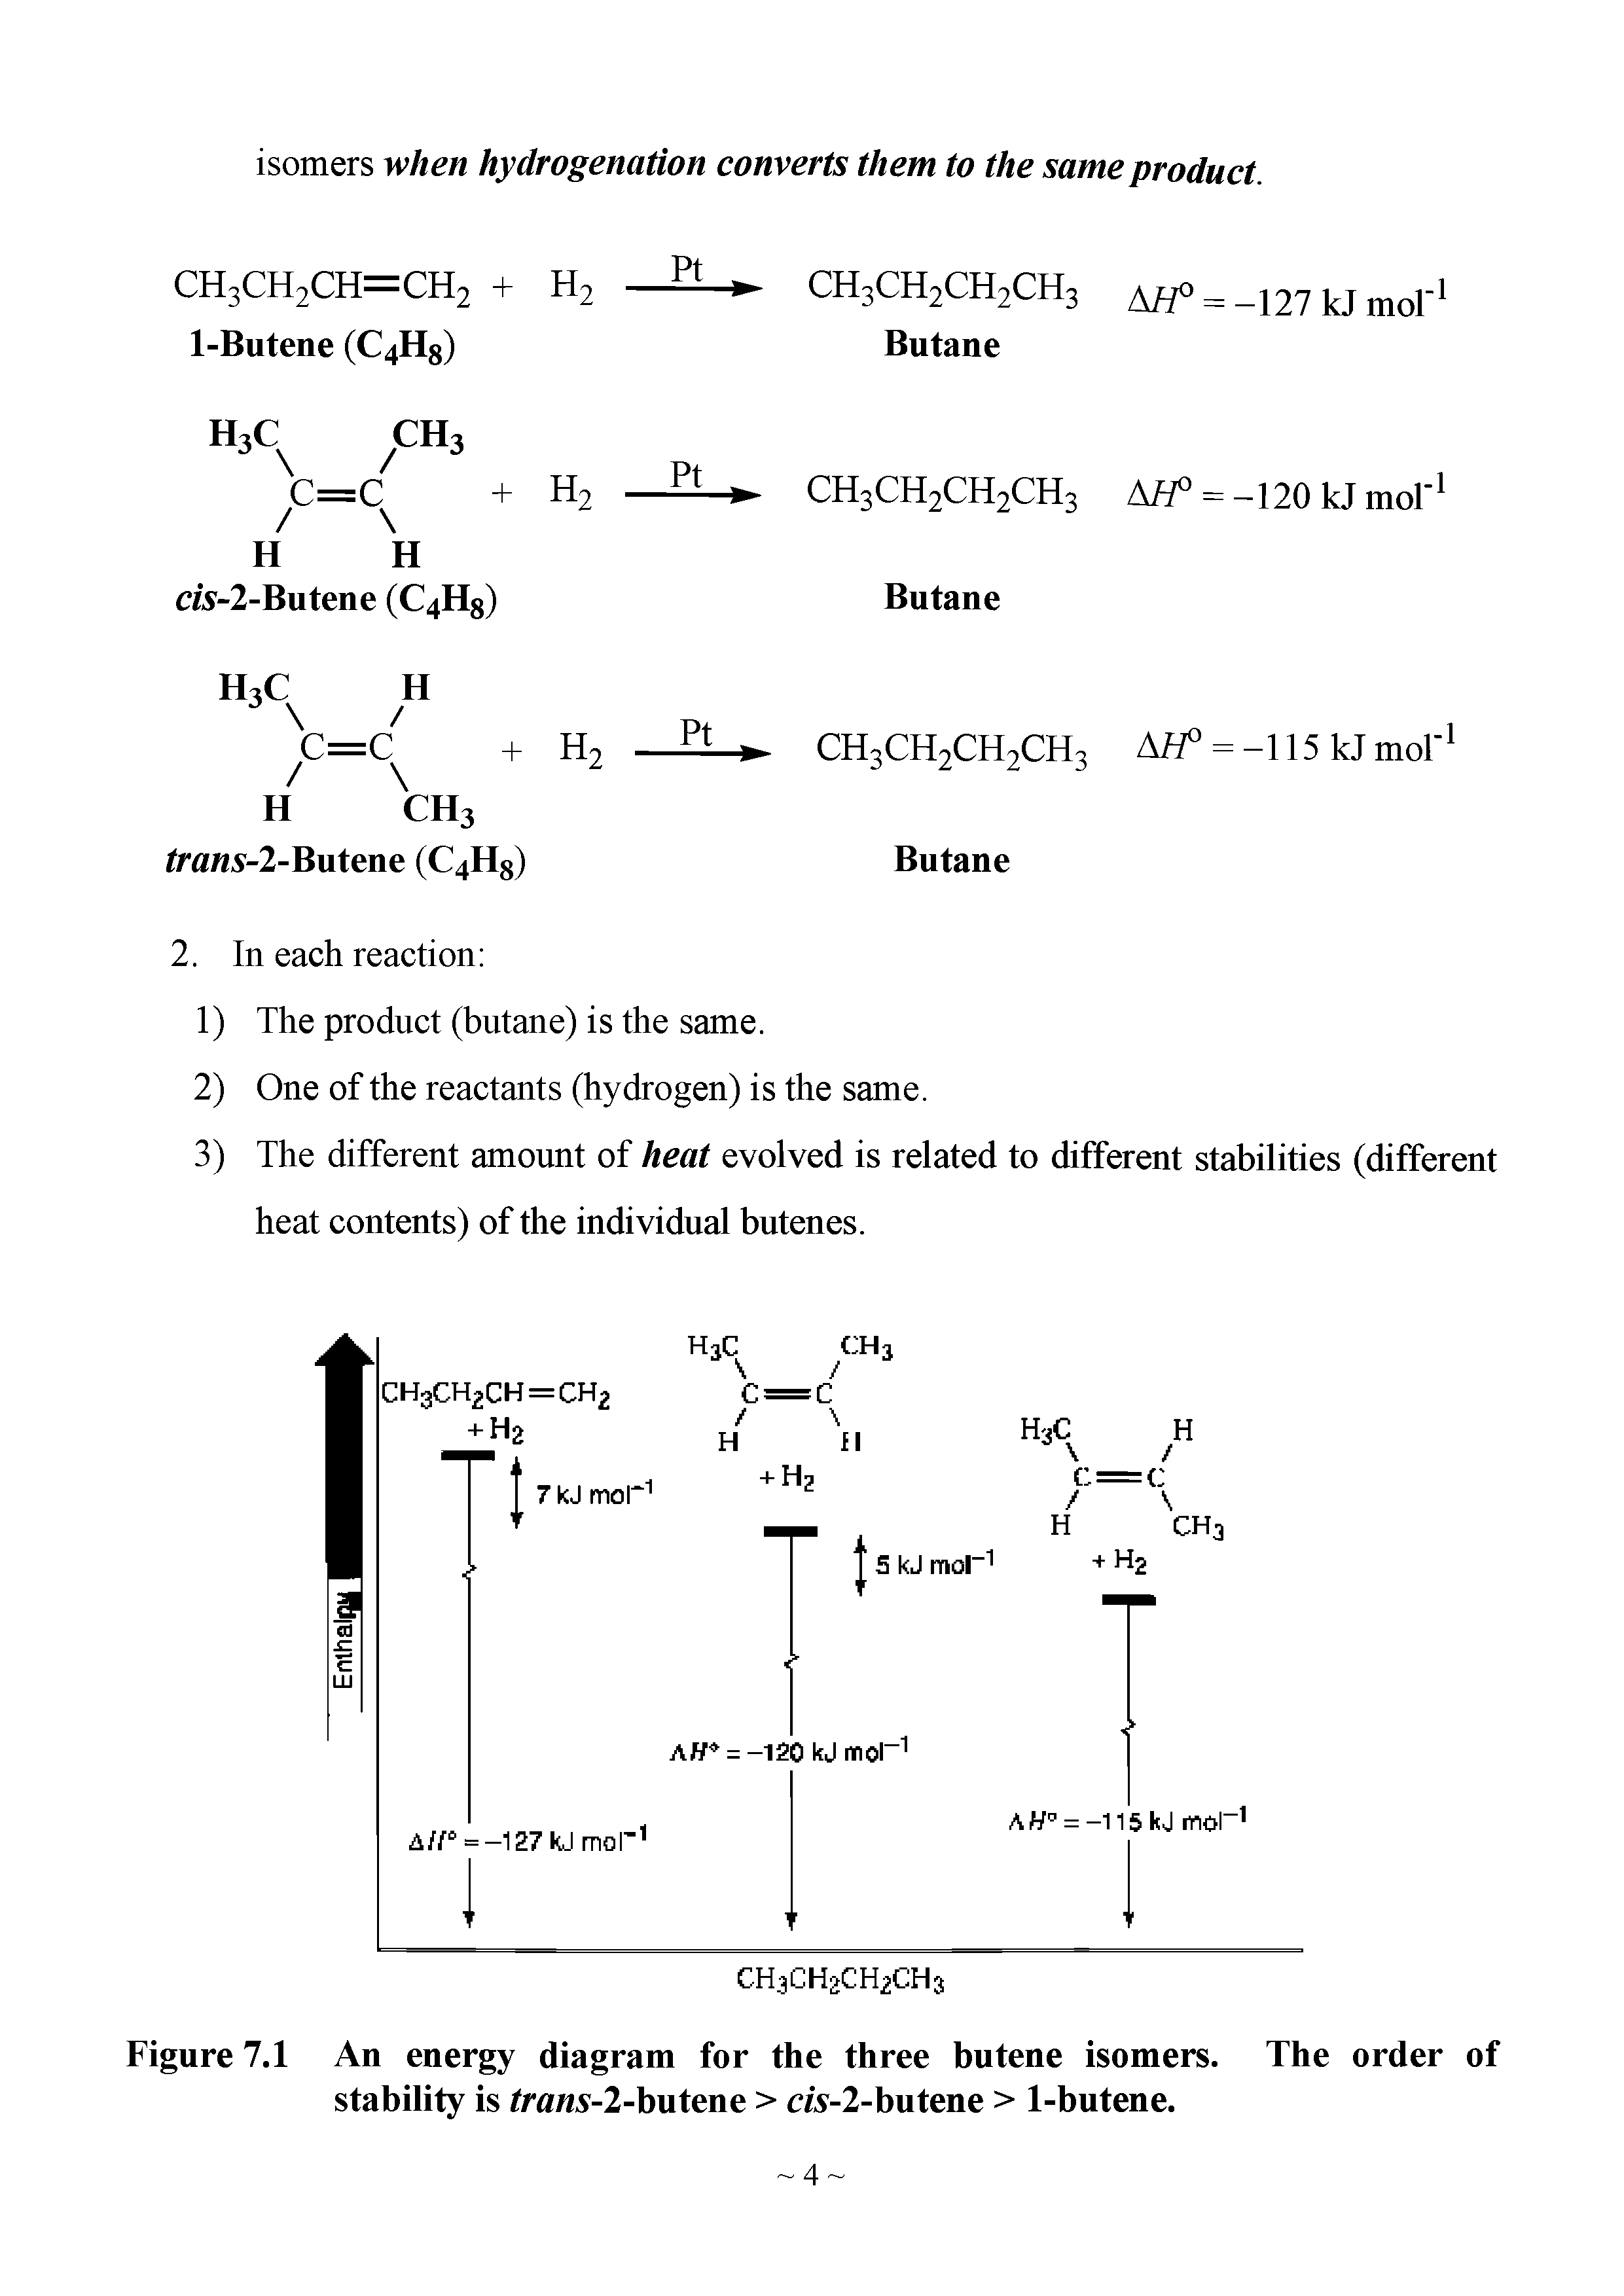 Figure 7.1 An energy diagram for the three butene isomers. The order of stability is trans-2-butene > cw-2-butene > 1-butene.